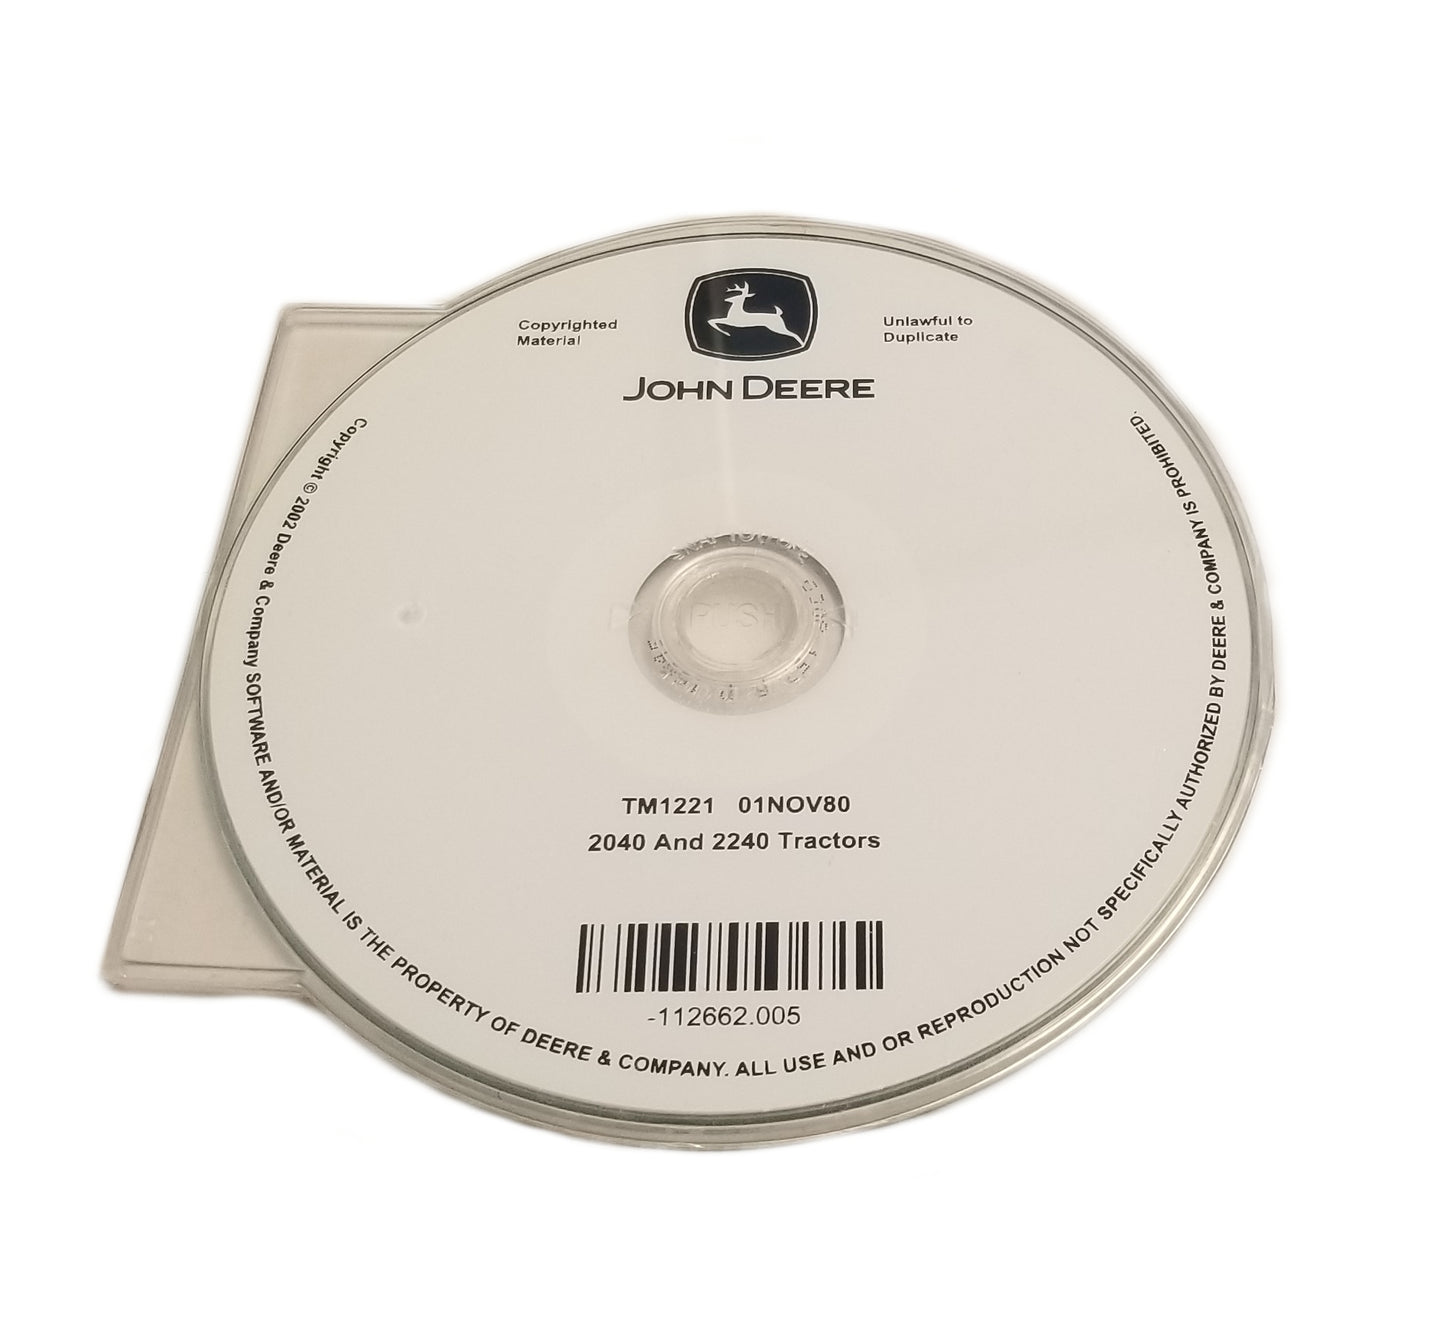 John Deere 2040/2240 Tractor Technical Manual CD - TM1221CD